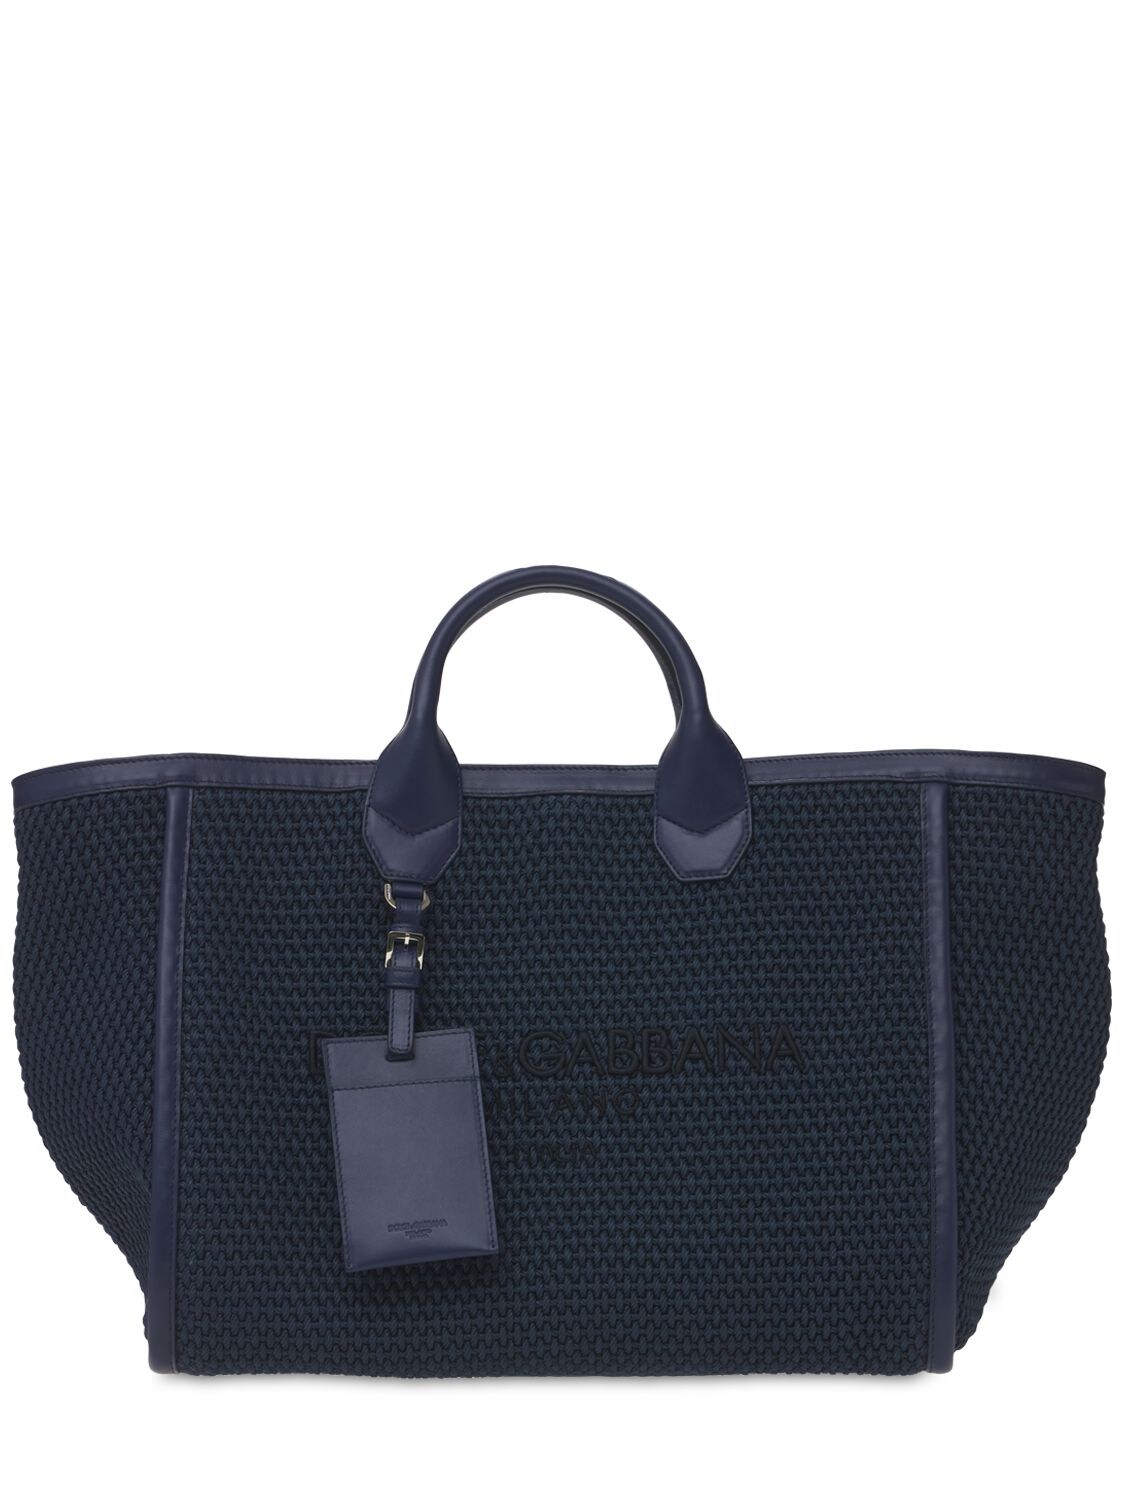 Dolce & Gabbana Logo Braided Tote Bag In Blue